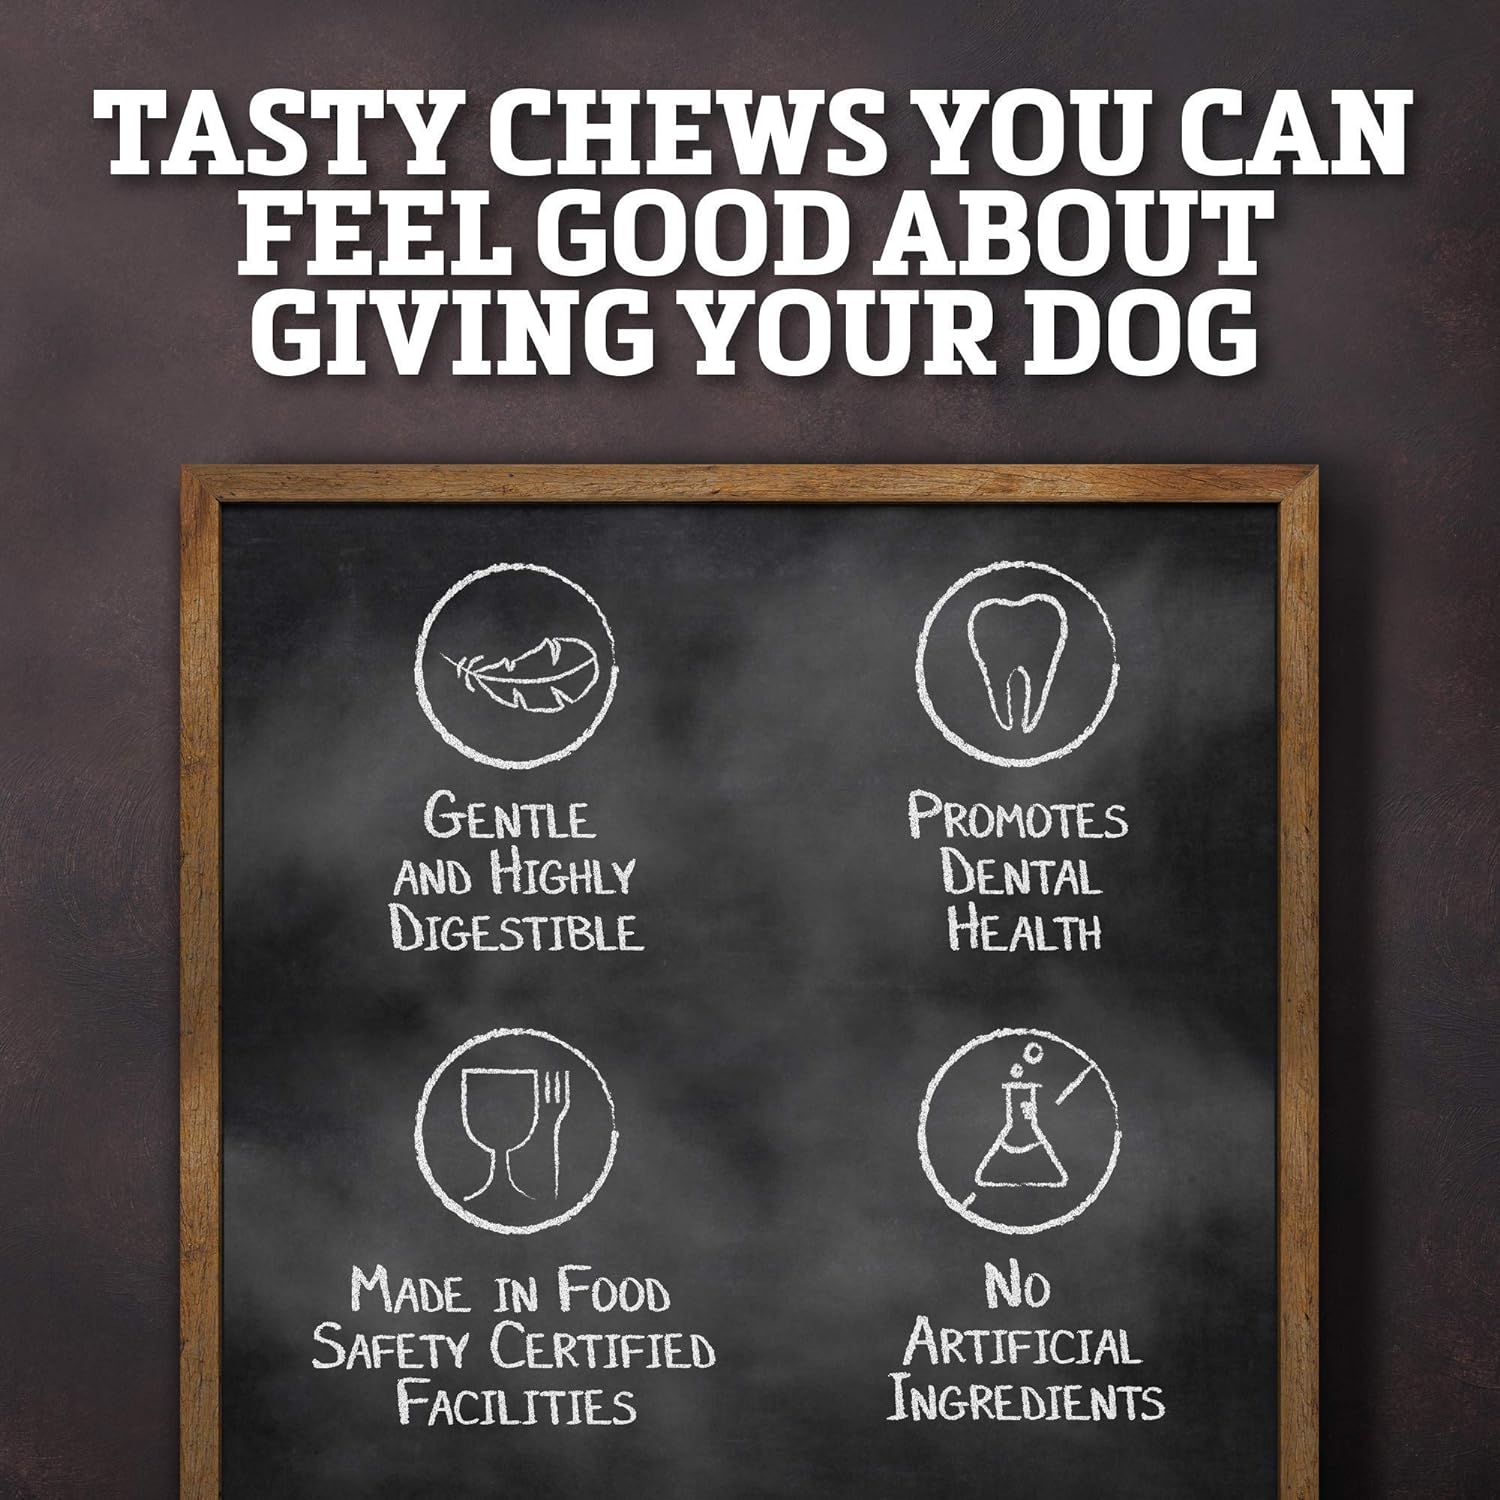 Buffalo Range Rawhide Dog Treats | Healthy, Grass-Fed Buffalo Jerky Raw Hide Chews | Hickory Smoked Flavor | Jerky Twist, 16 Count : Pet Supplies